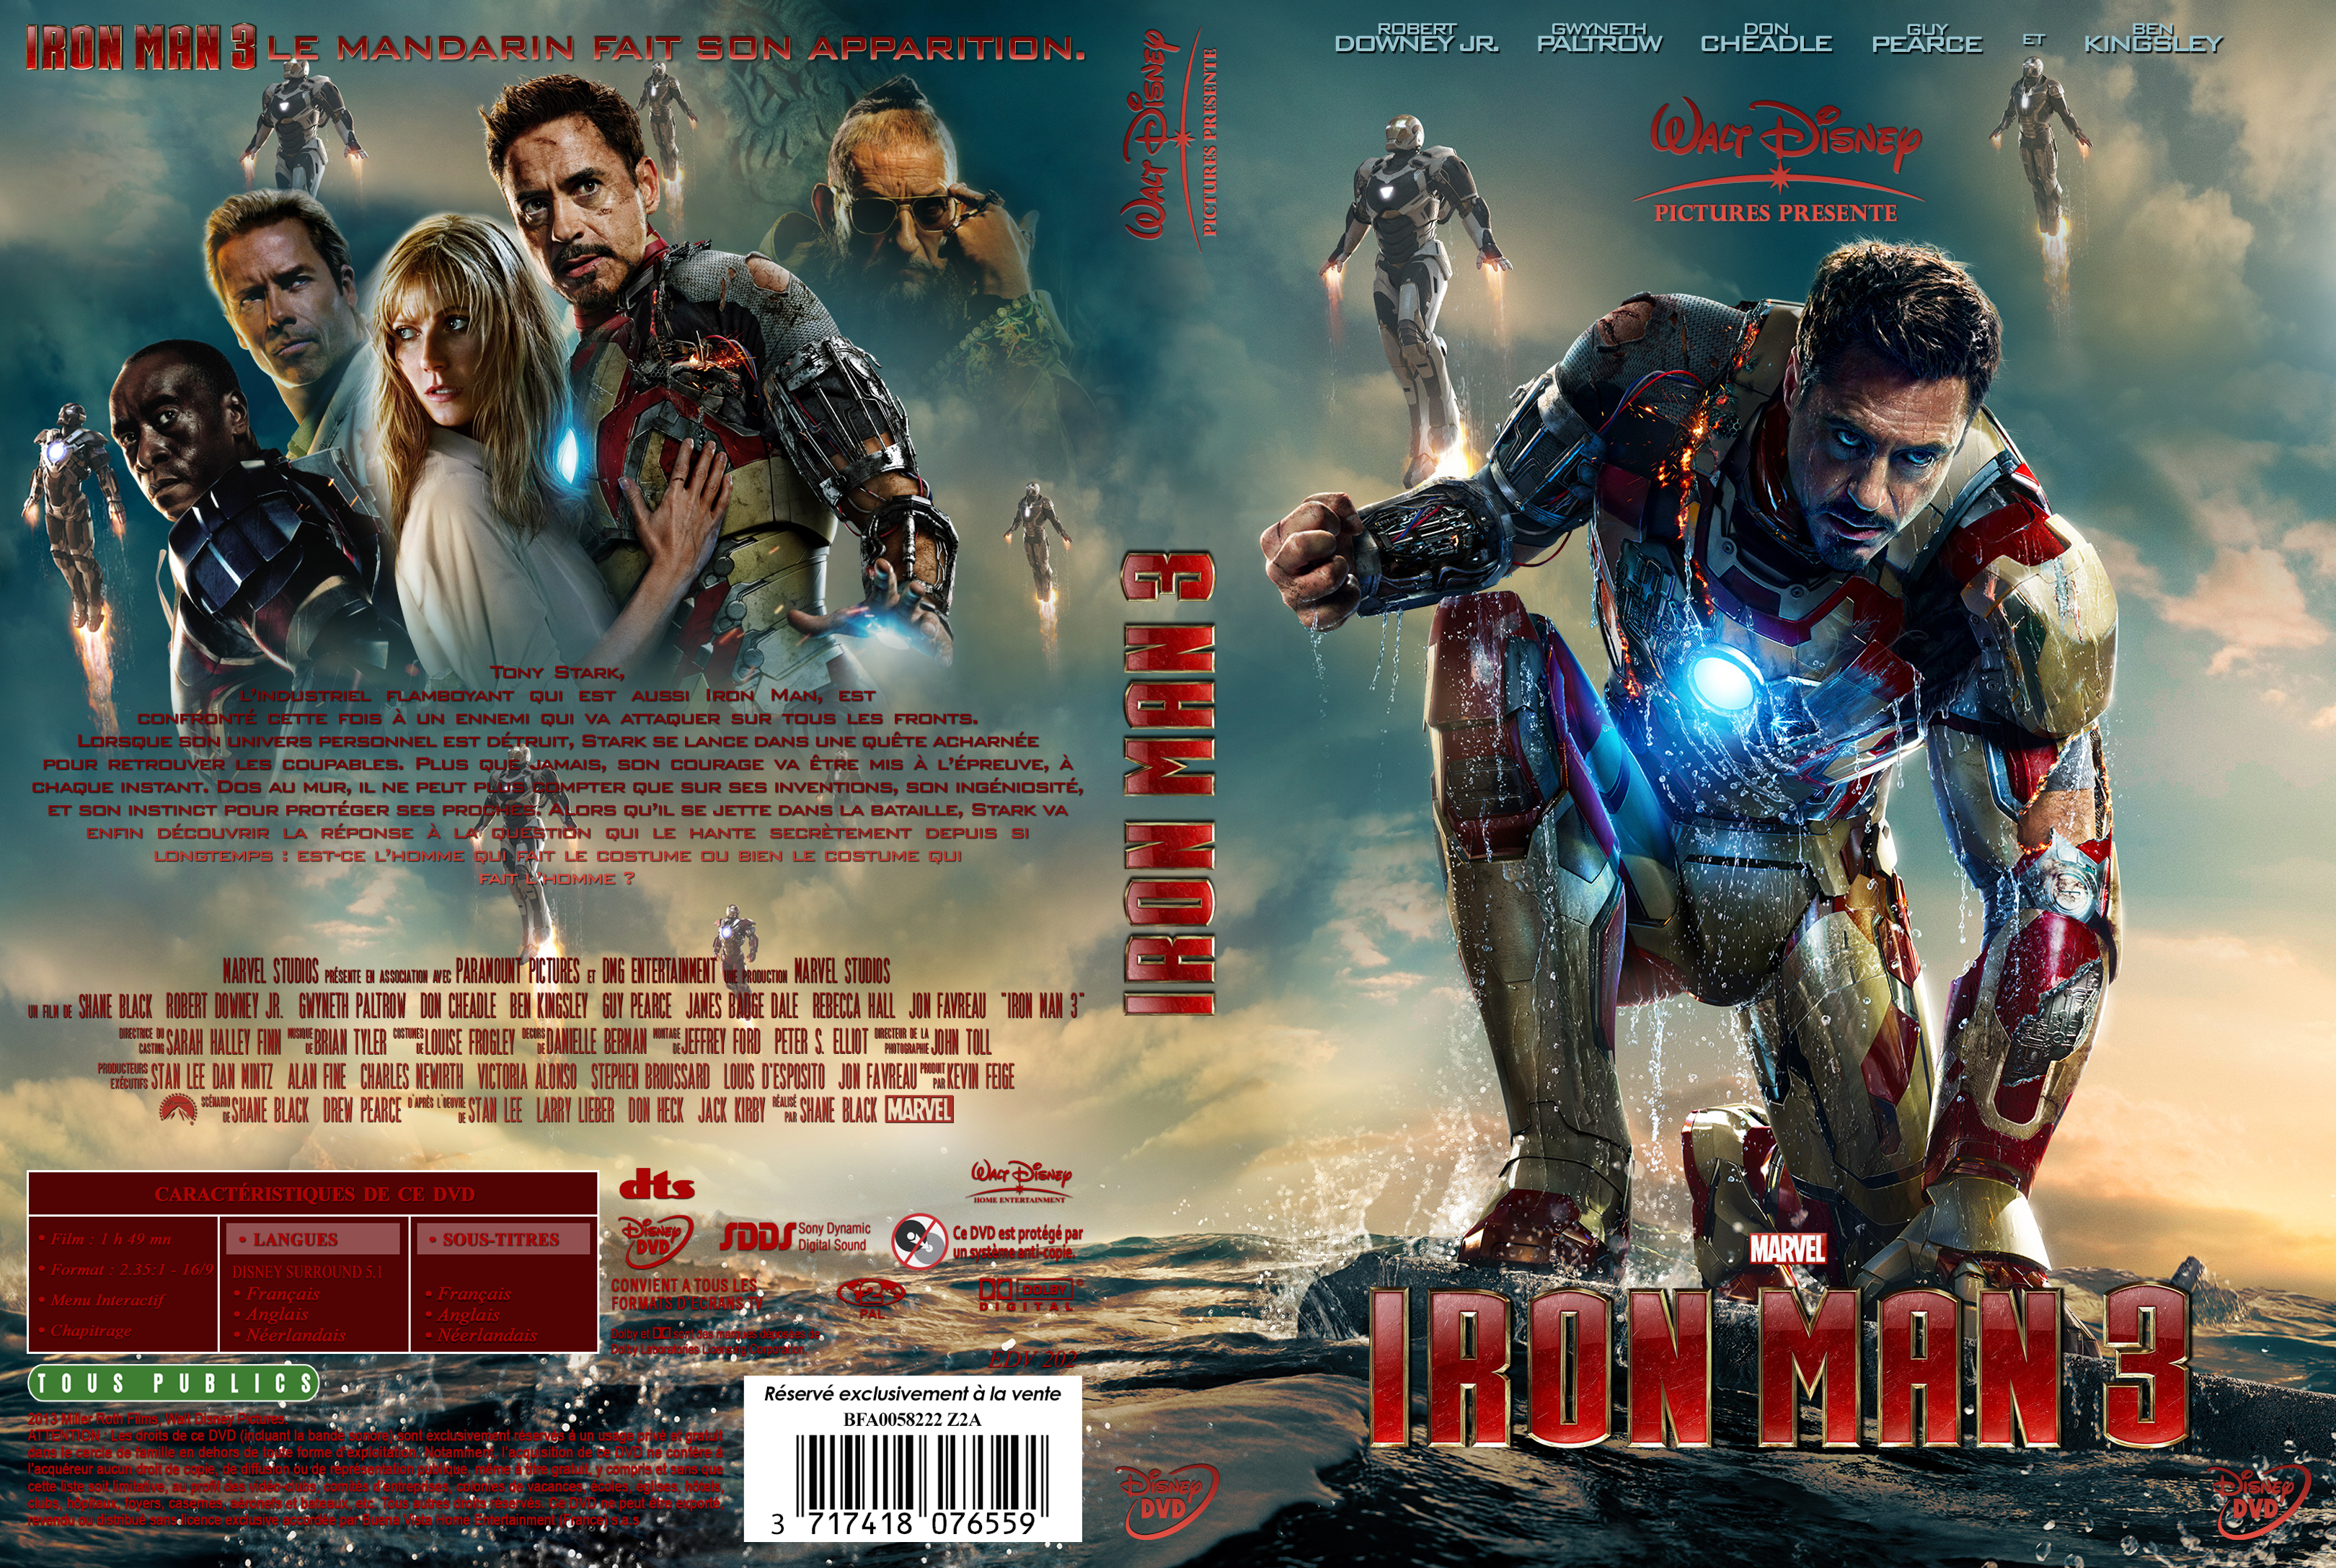 Jaquette DVD Iron Man 3 custom v2